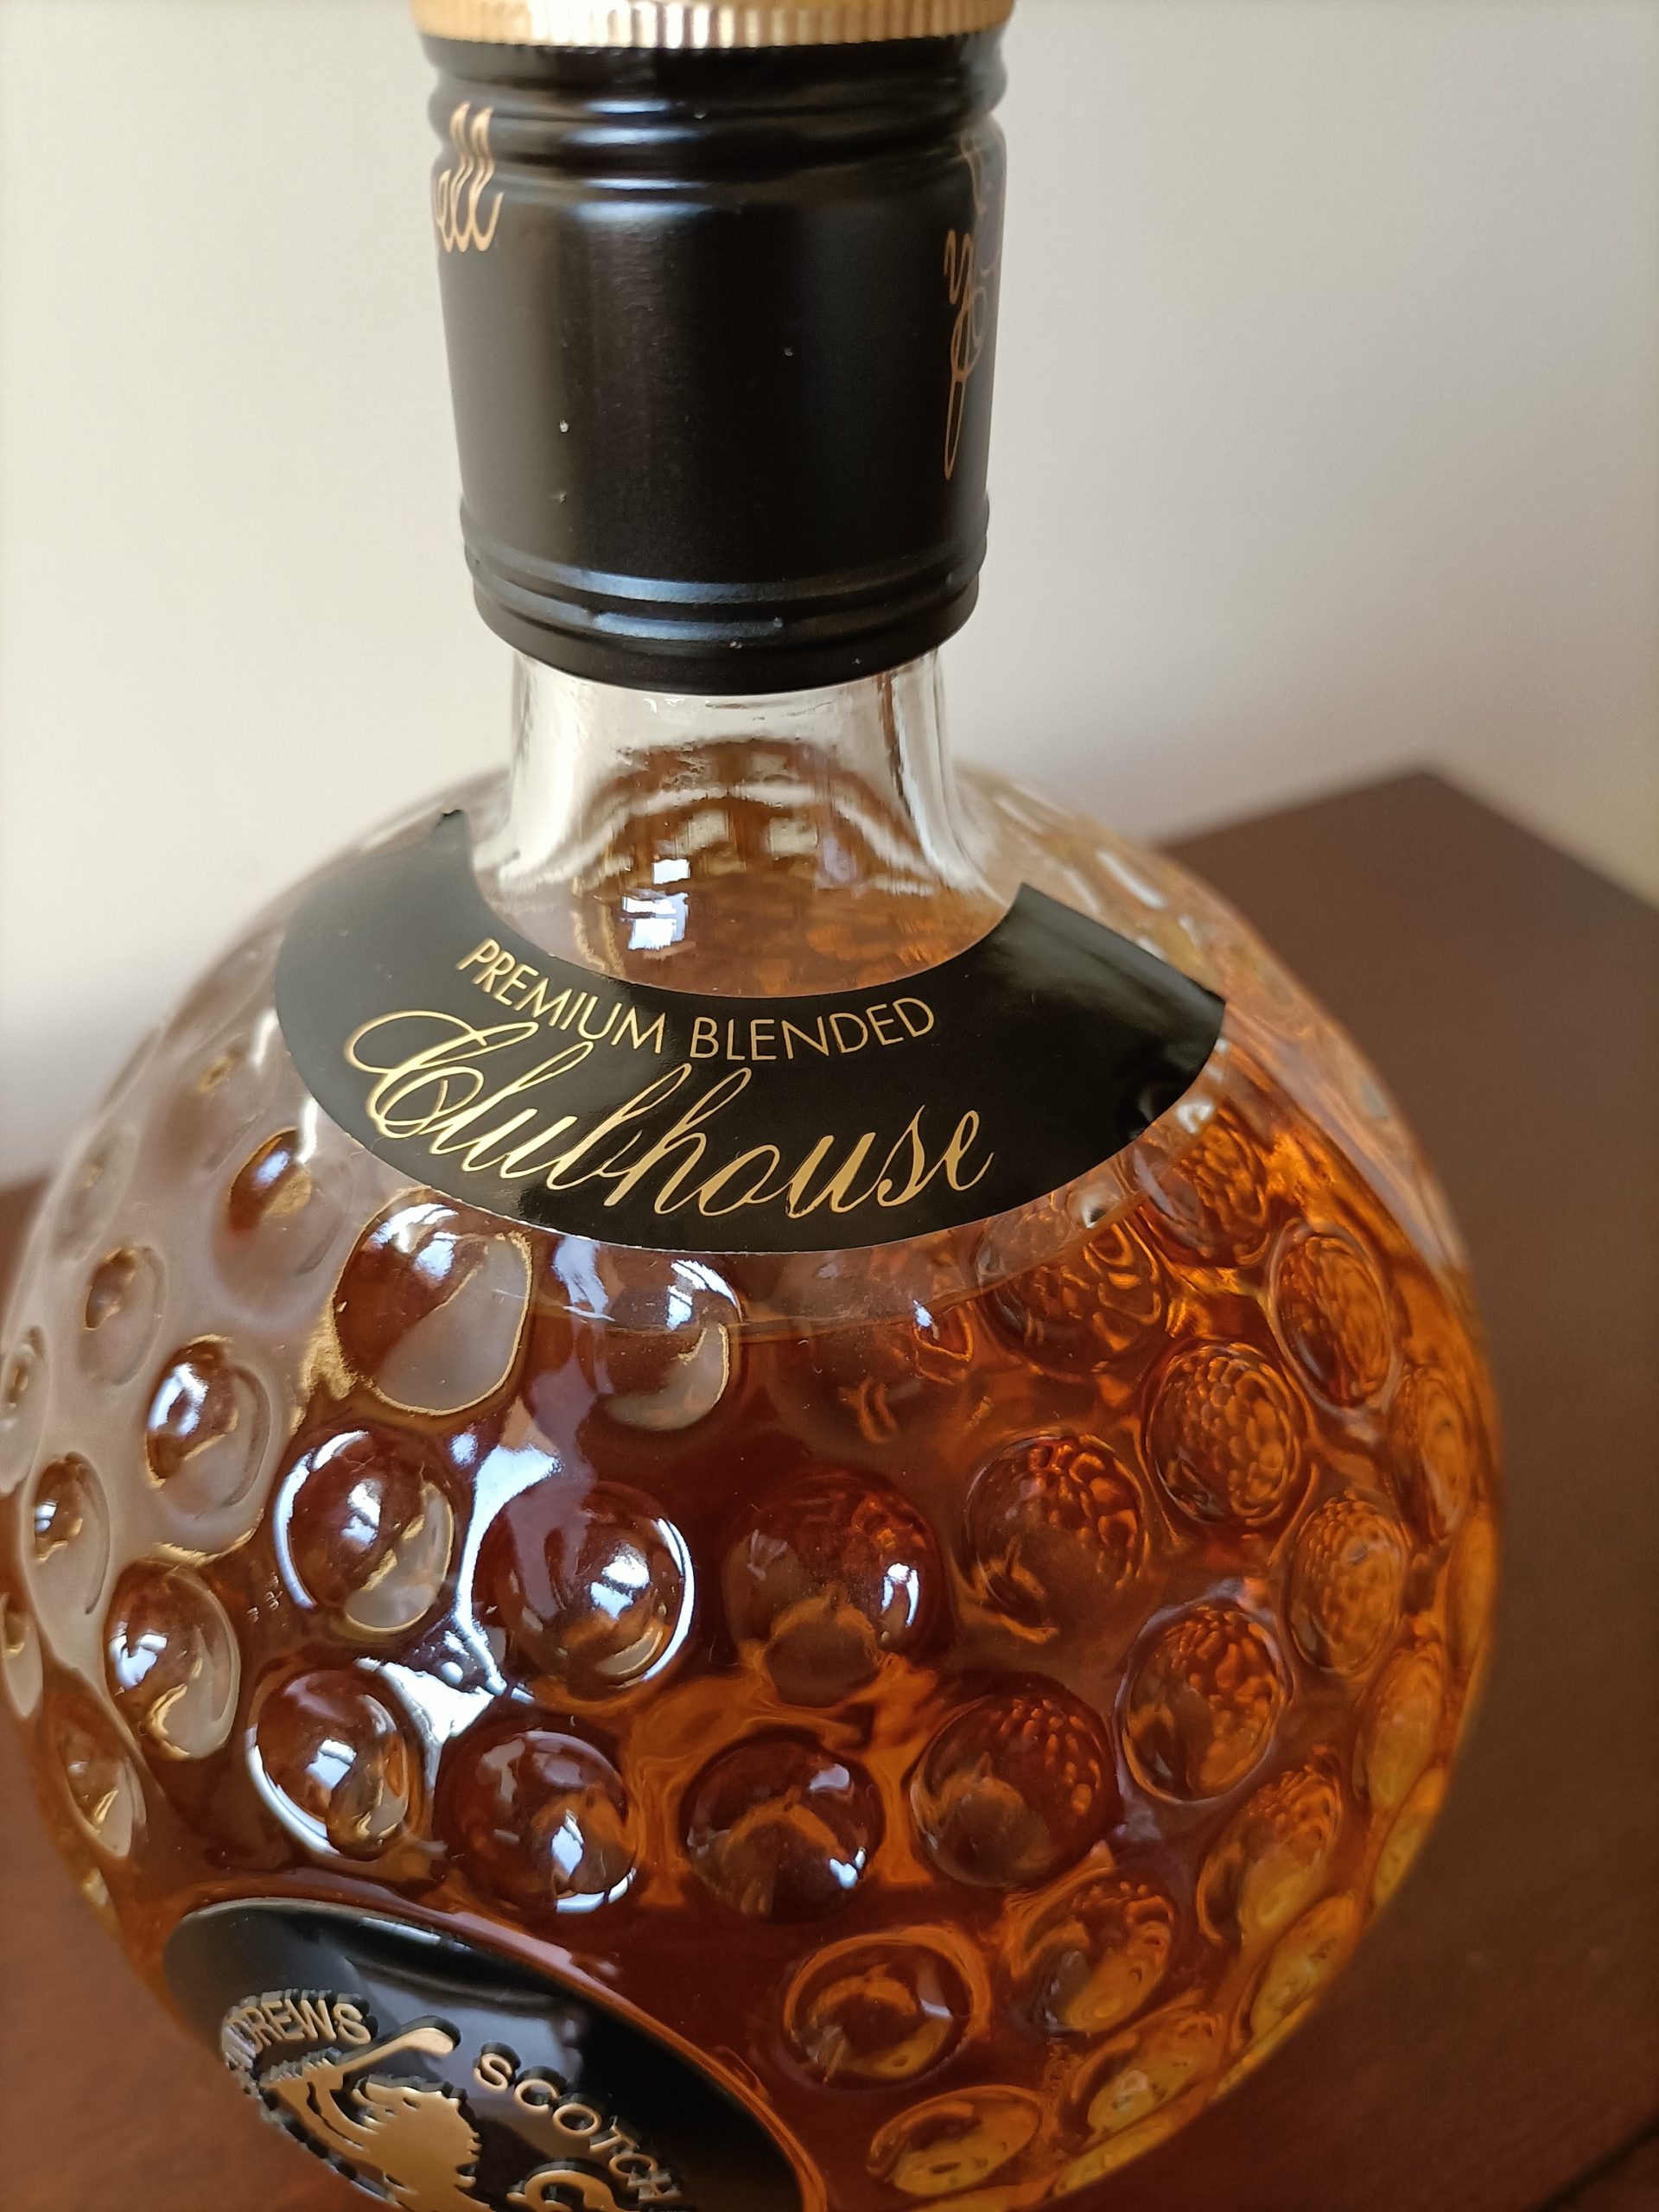 Old St. Andrews Premium Blended Clubhouse - Garrafas de Whisky